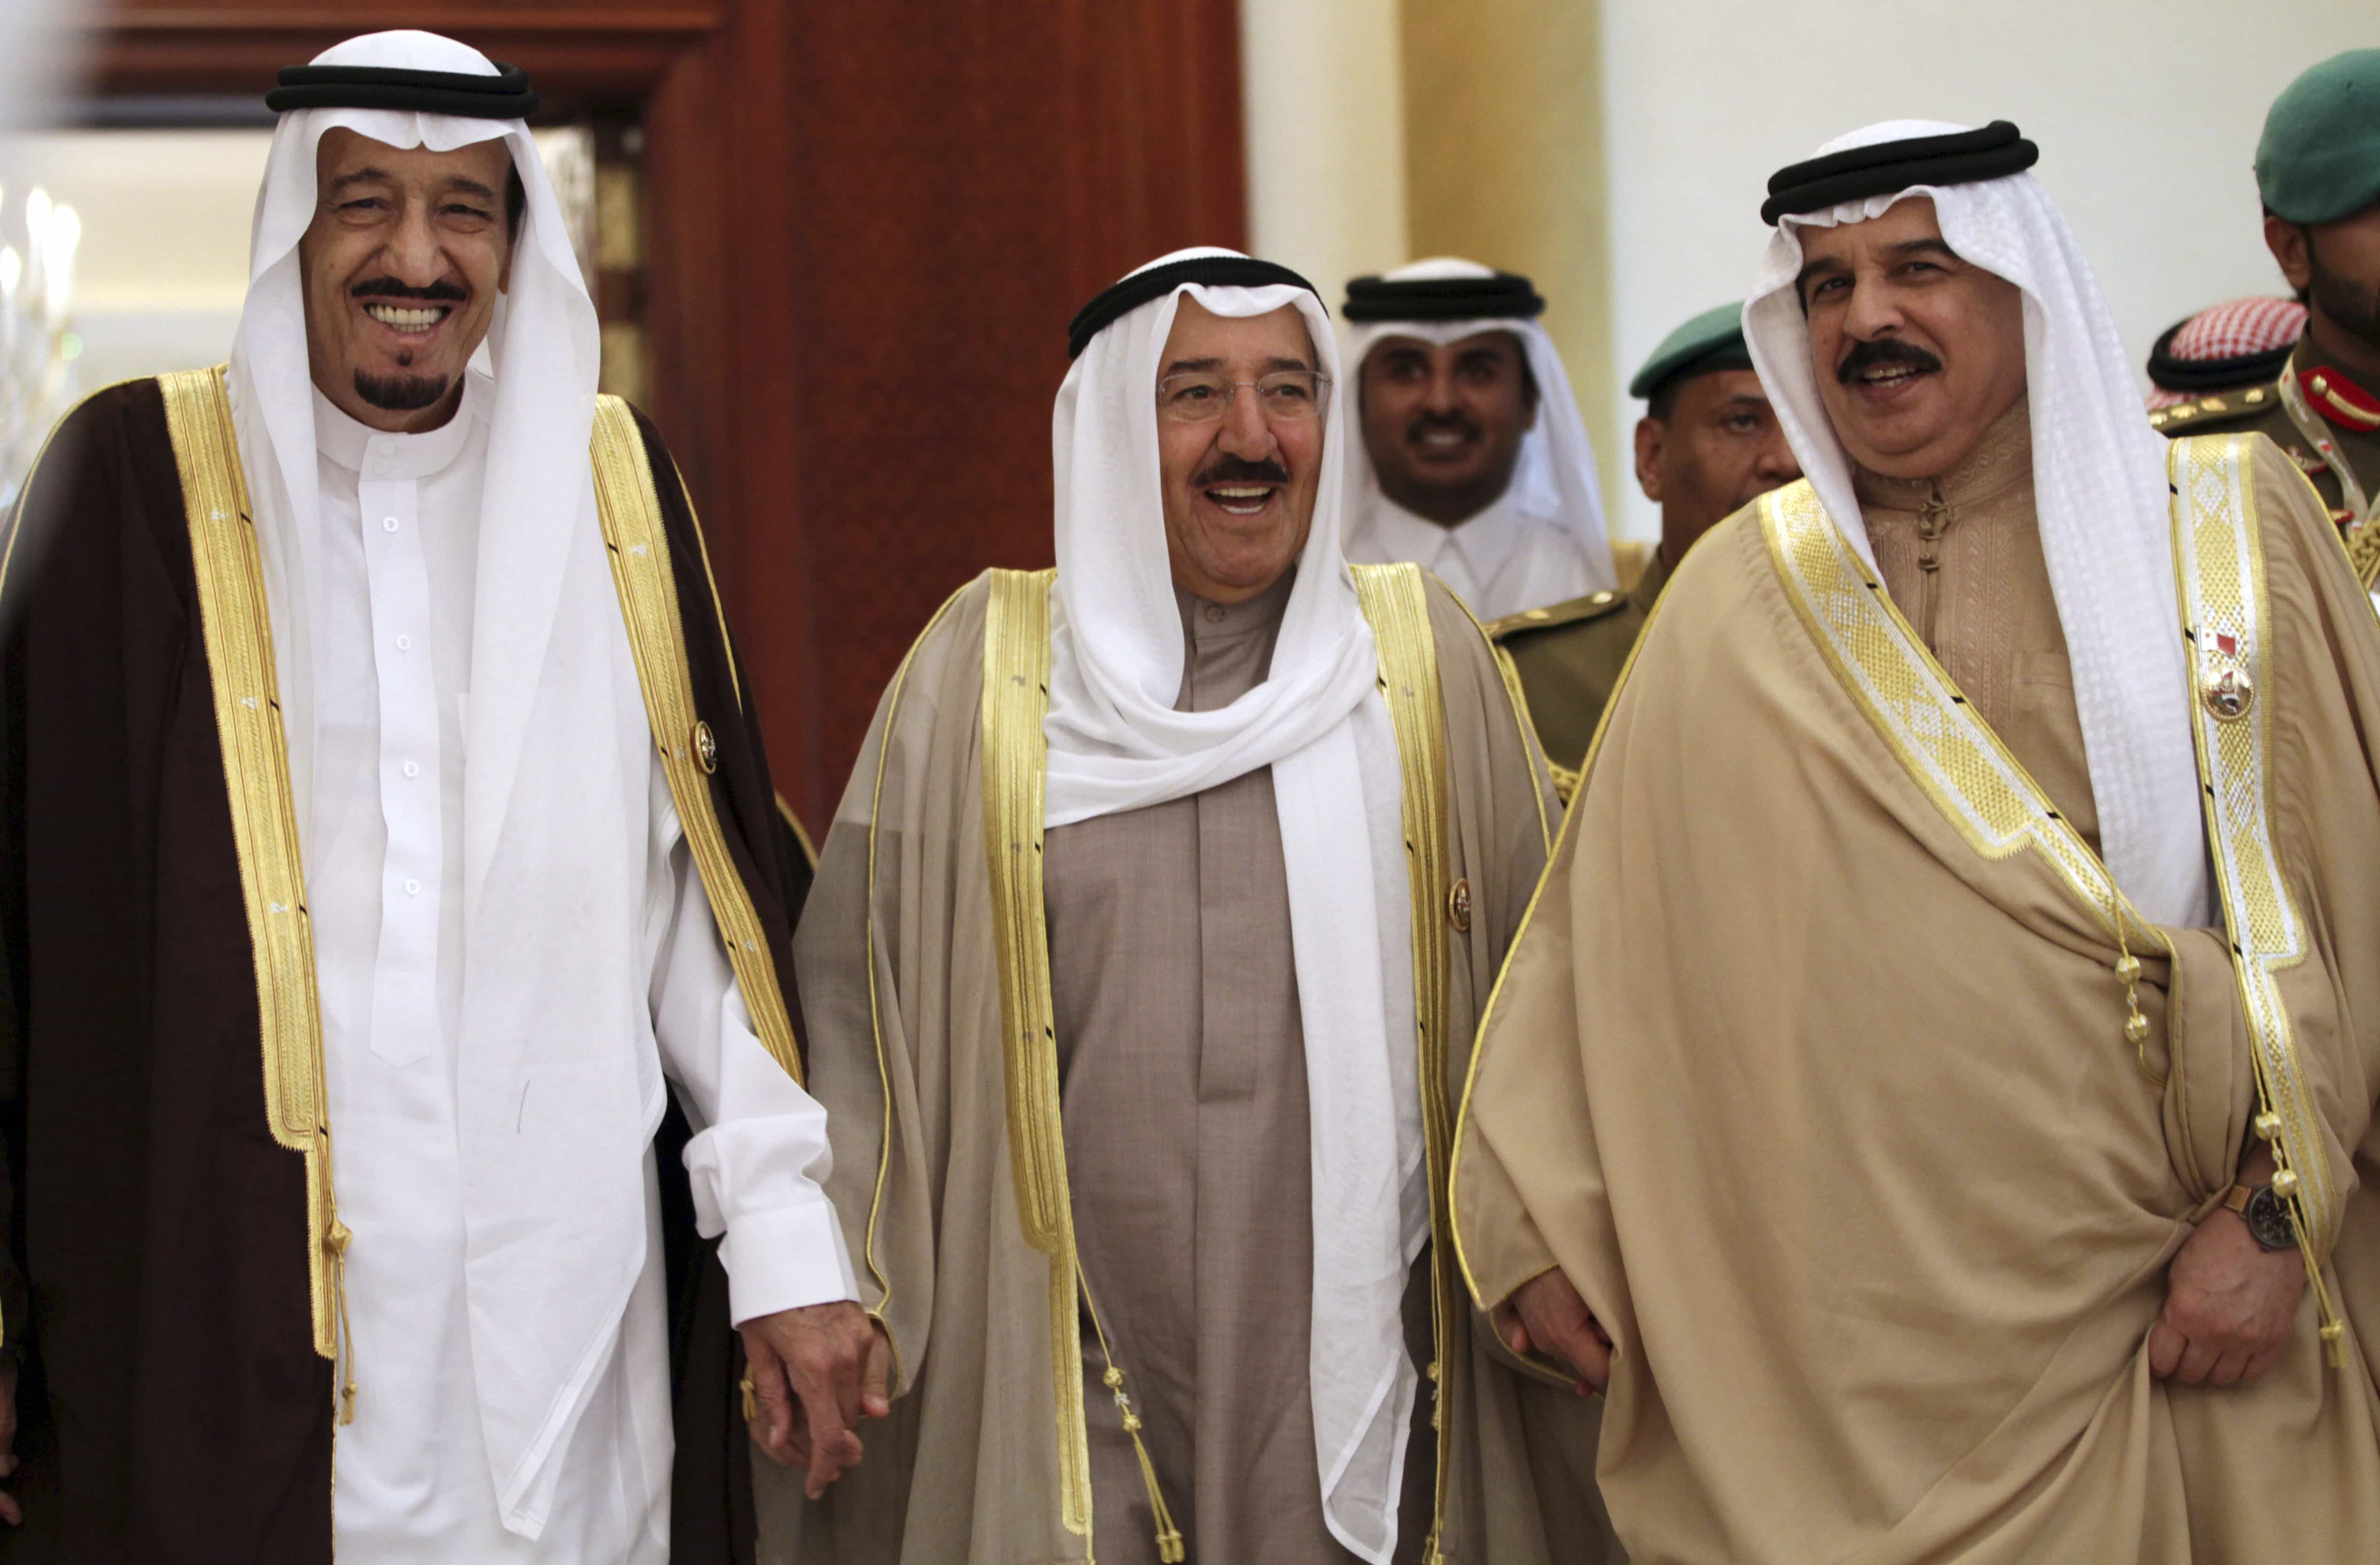 Saudi King Salman bin Abdul Aziz Al Saud, from left, Kuwait's Emir Sheik Sabah Al Ahmad Al Sabah and Bahrain's King Hamad bin Isa Al Khalifa, AP Photo/Hasan Jamali, File